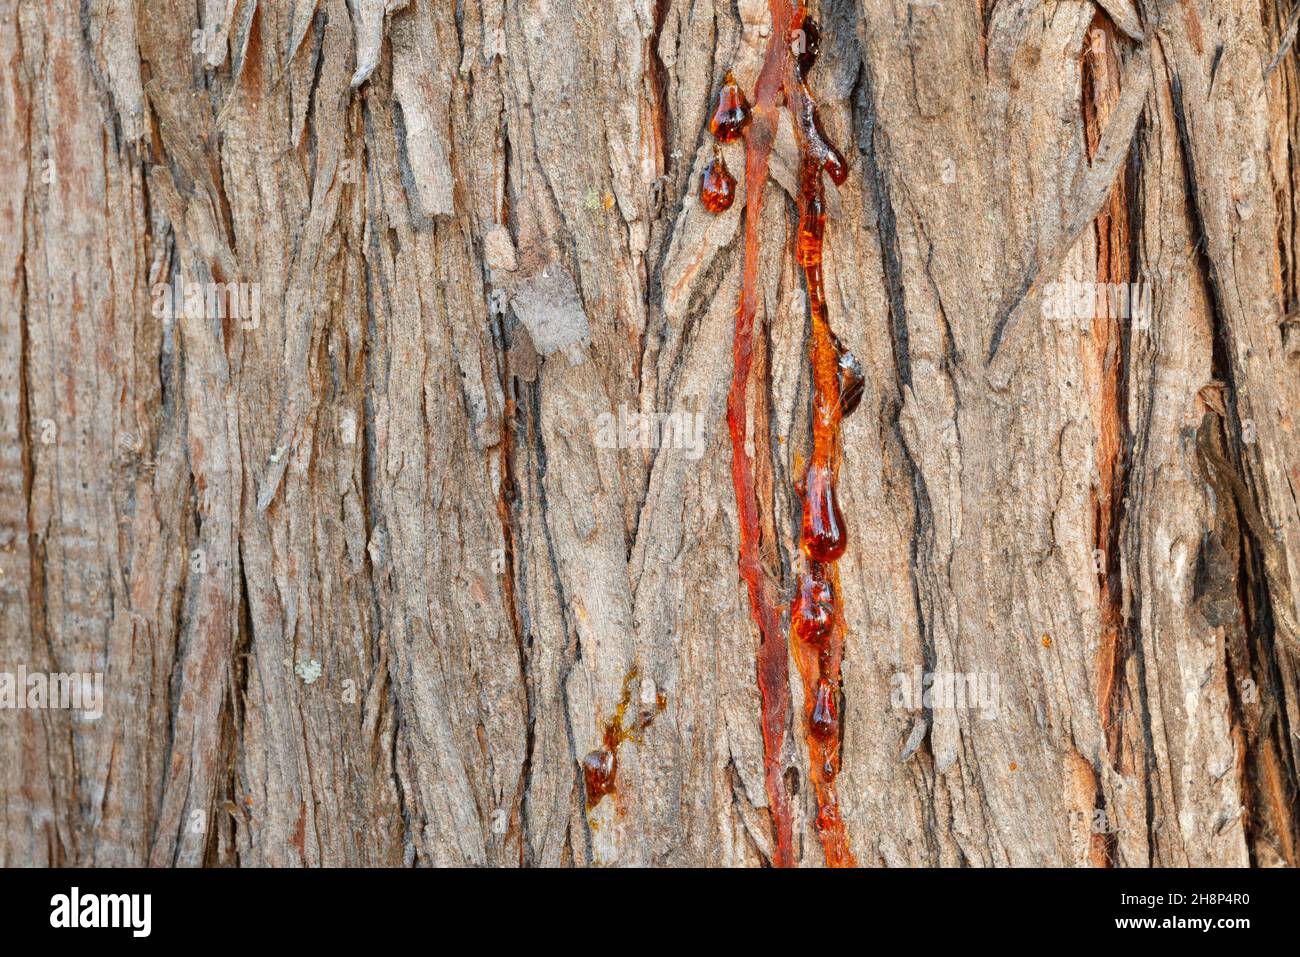 Italy, Lombardy, Bald Cypress Tree Resin Drops Stock Photo